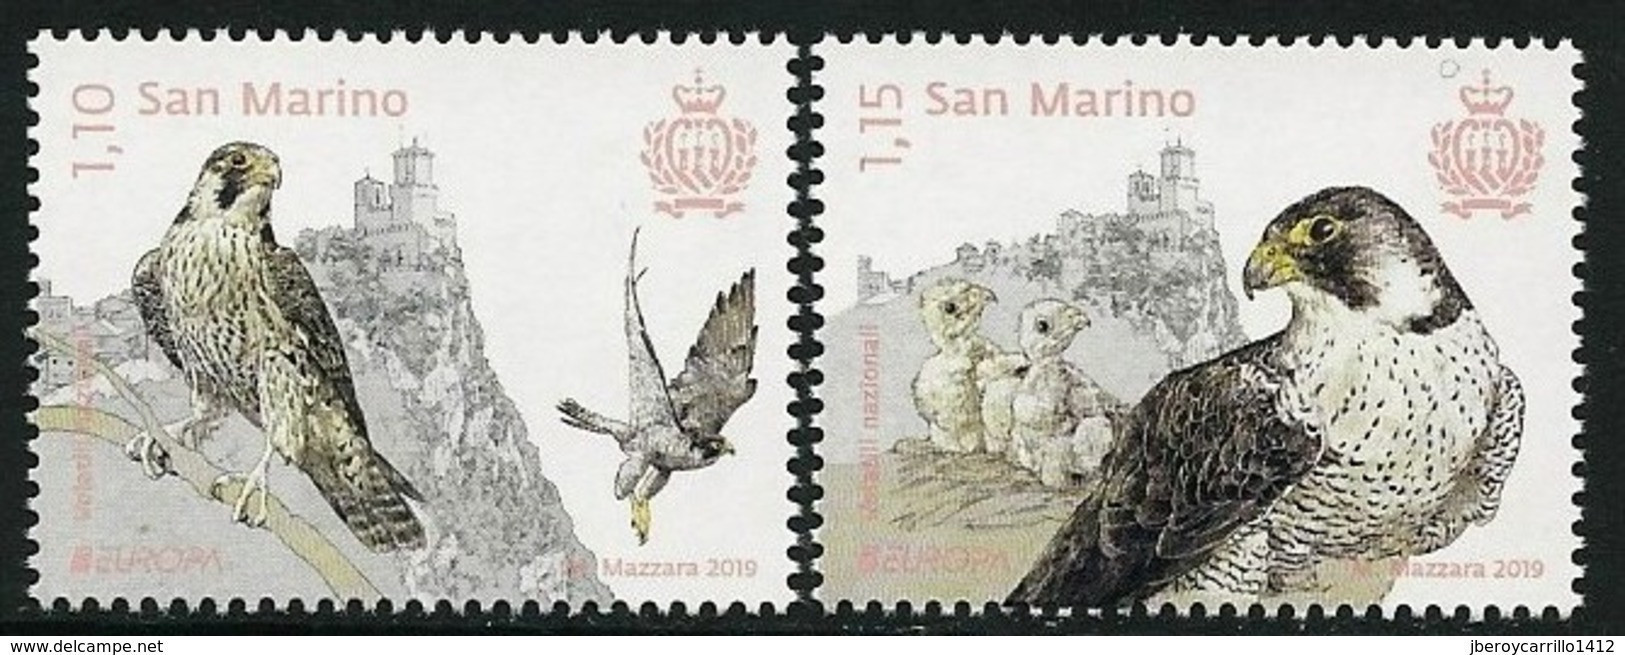 SAN MARINO/ SAINT-MARIN - EUROPA 2019 -NATIONAL BIRDS.-"AVES - BIRDS - VÖGEL -OISEAUX"- SET Of 2 Stamps With LOGO EUROPA - 2019